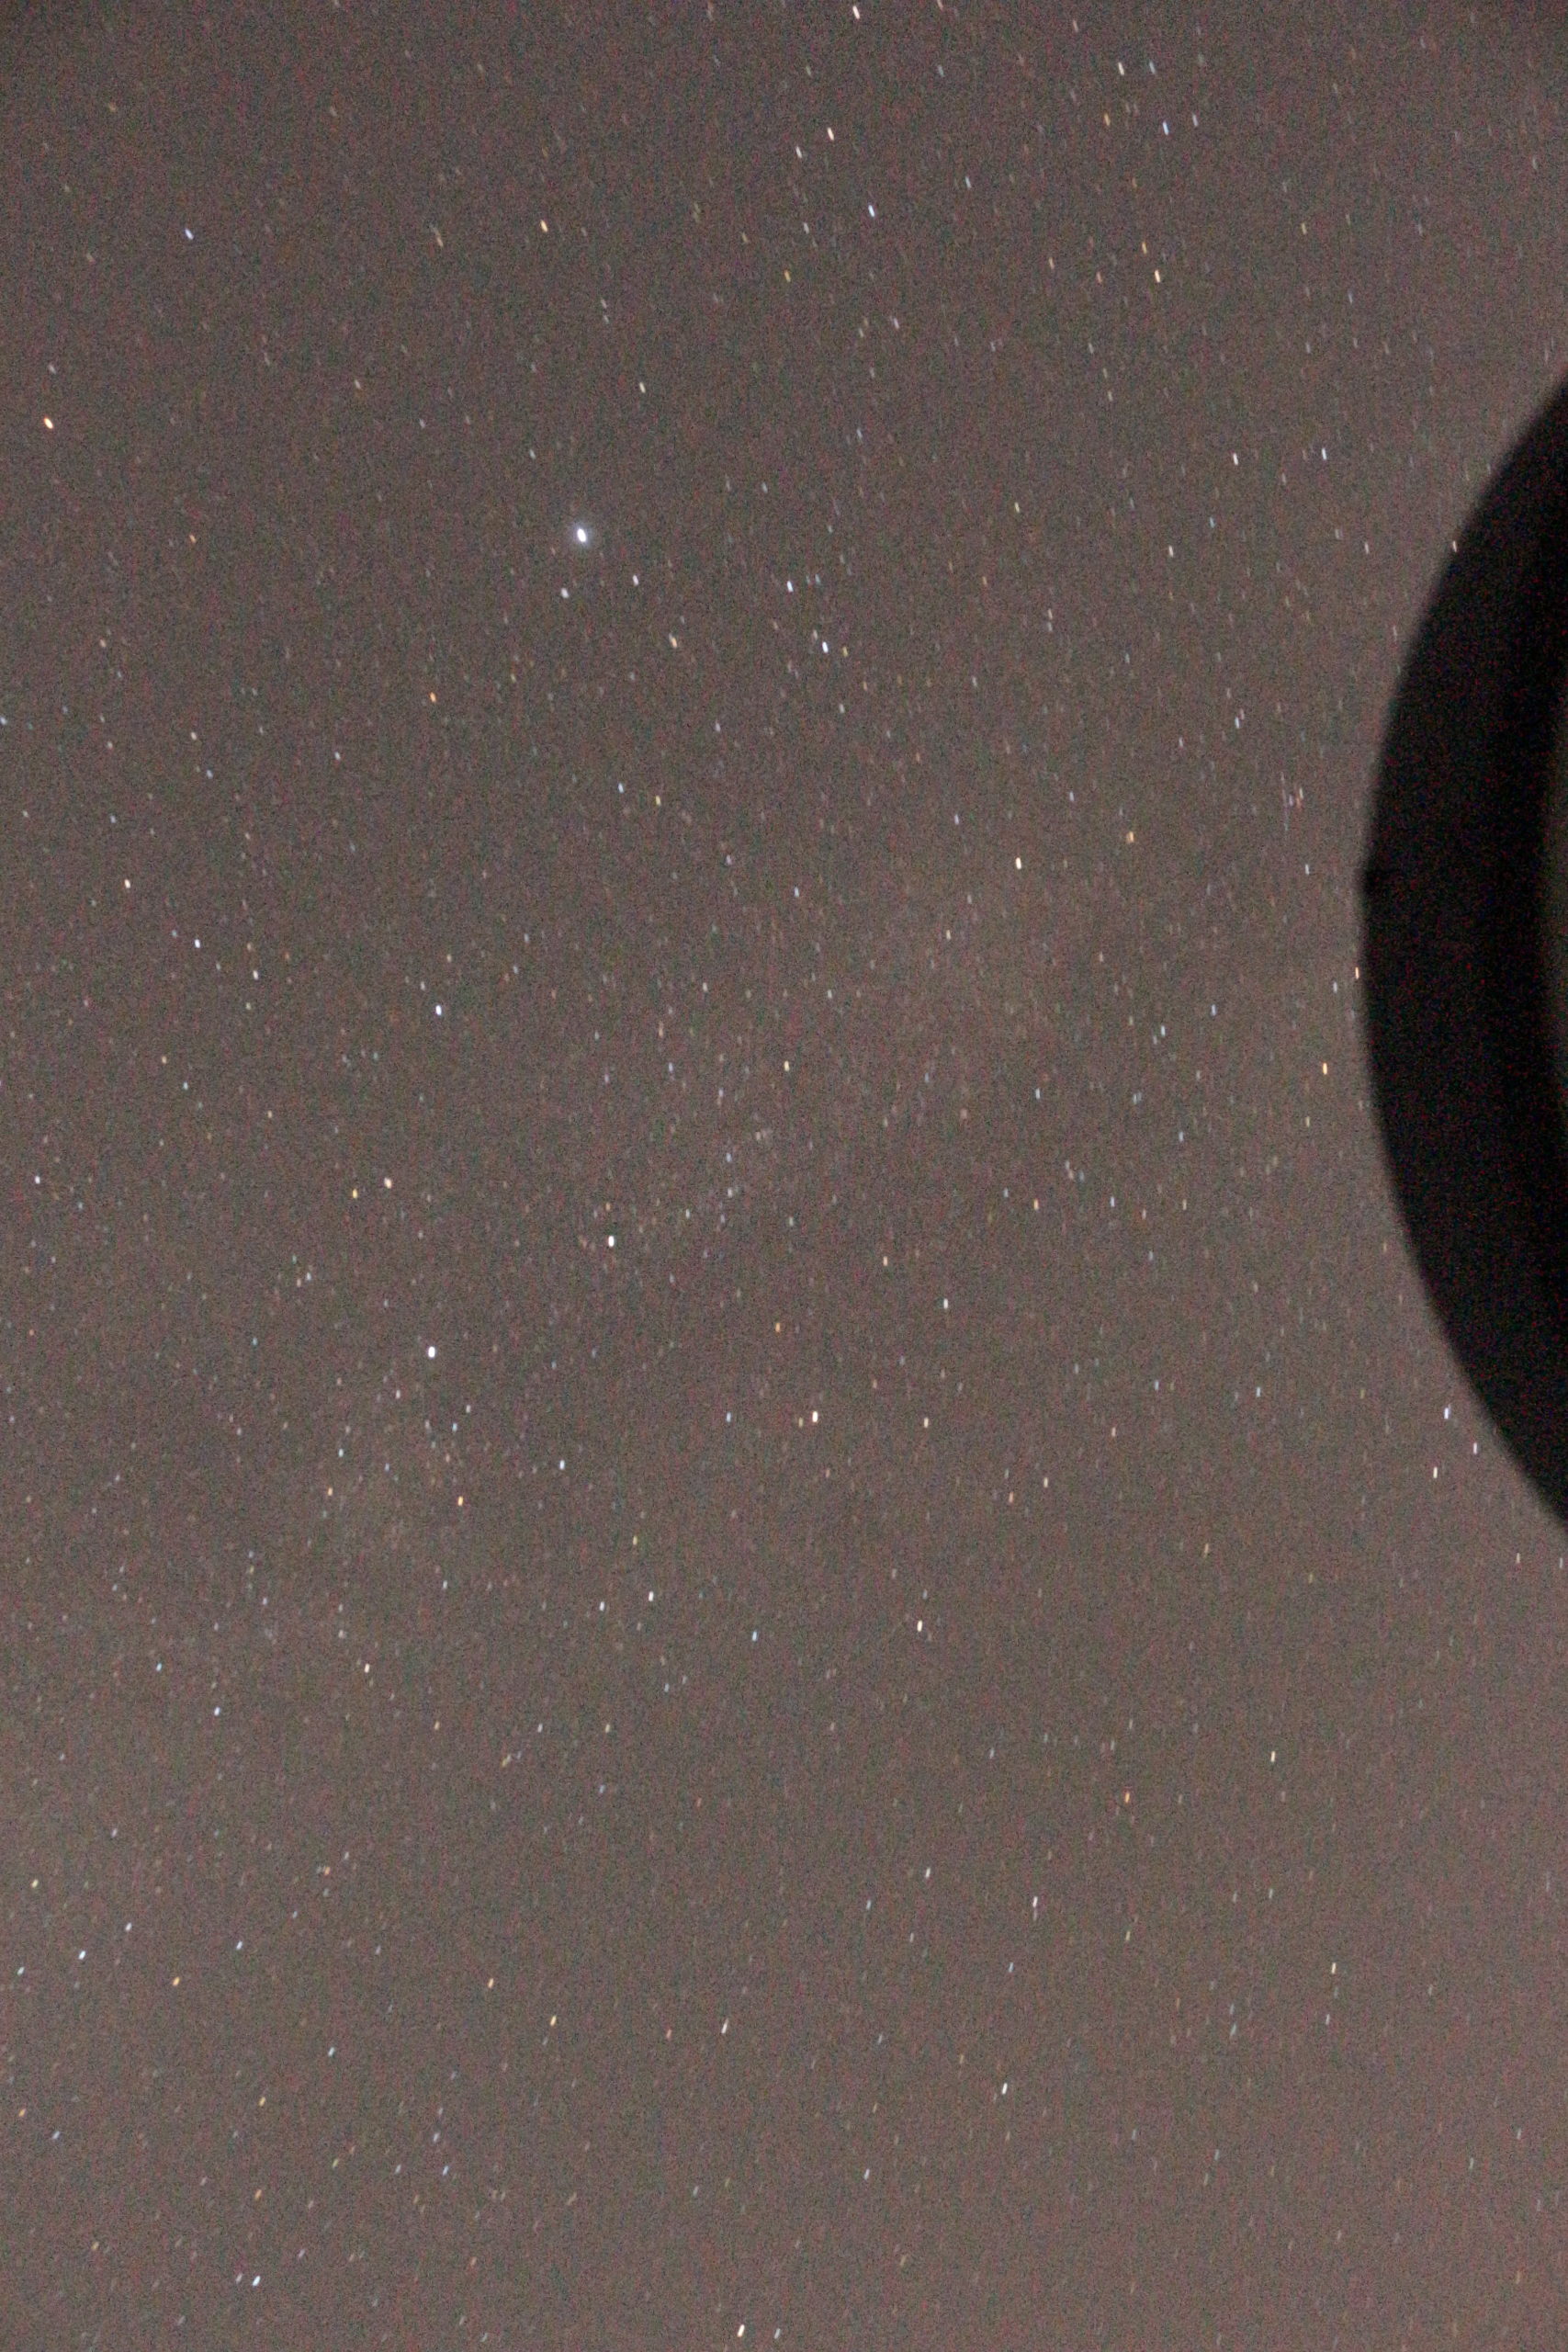 Cygnus Lyra star field